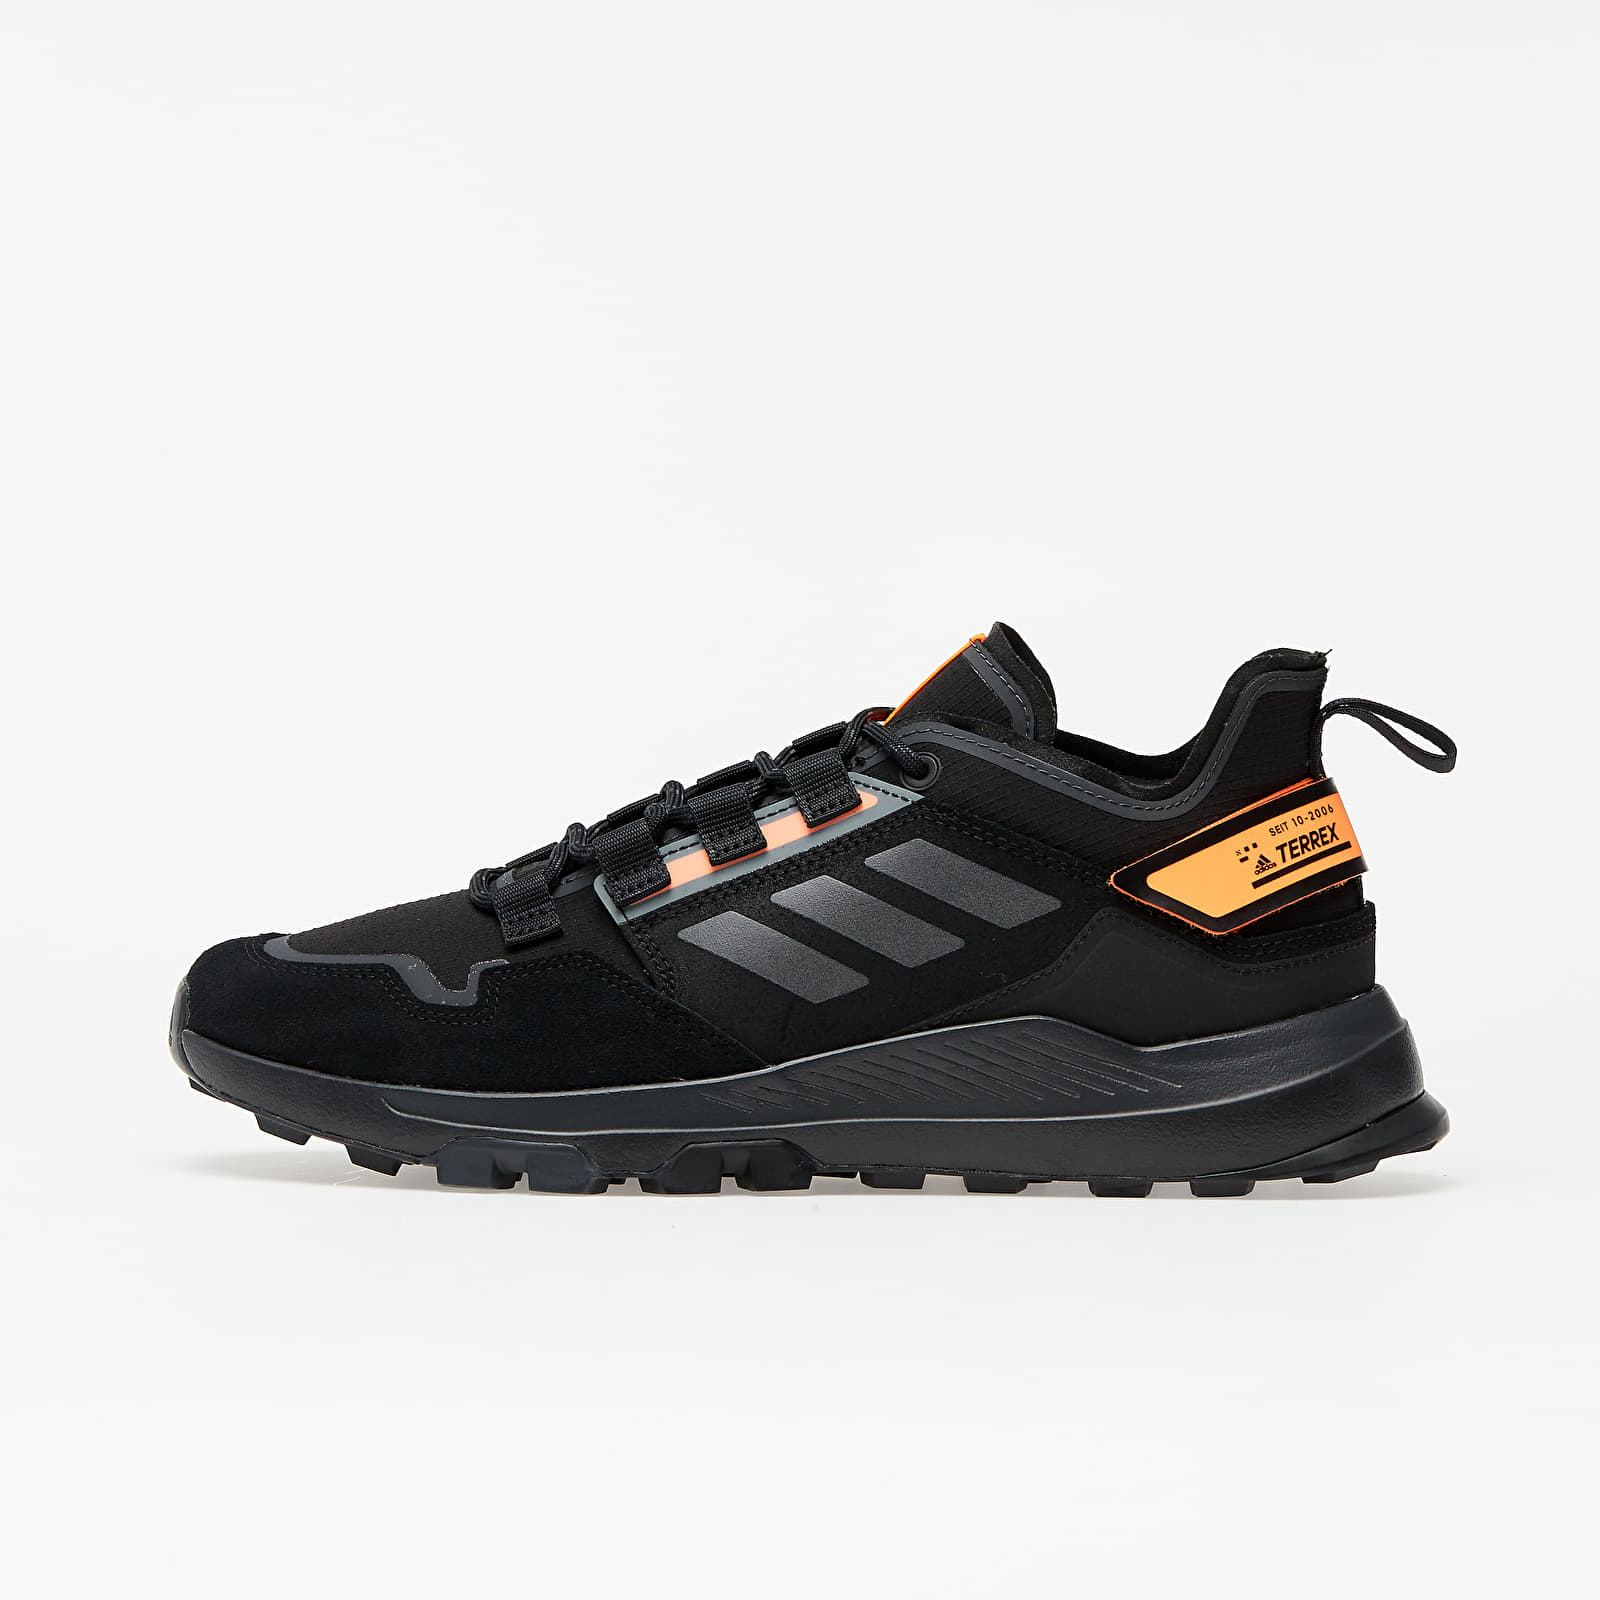 Men's shoes adidas Terrex Hikster Core Black/ Dg Solid Grey/ Signature Orange